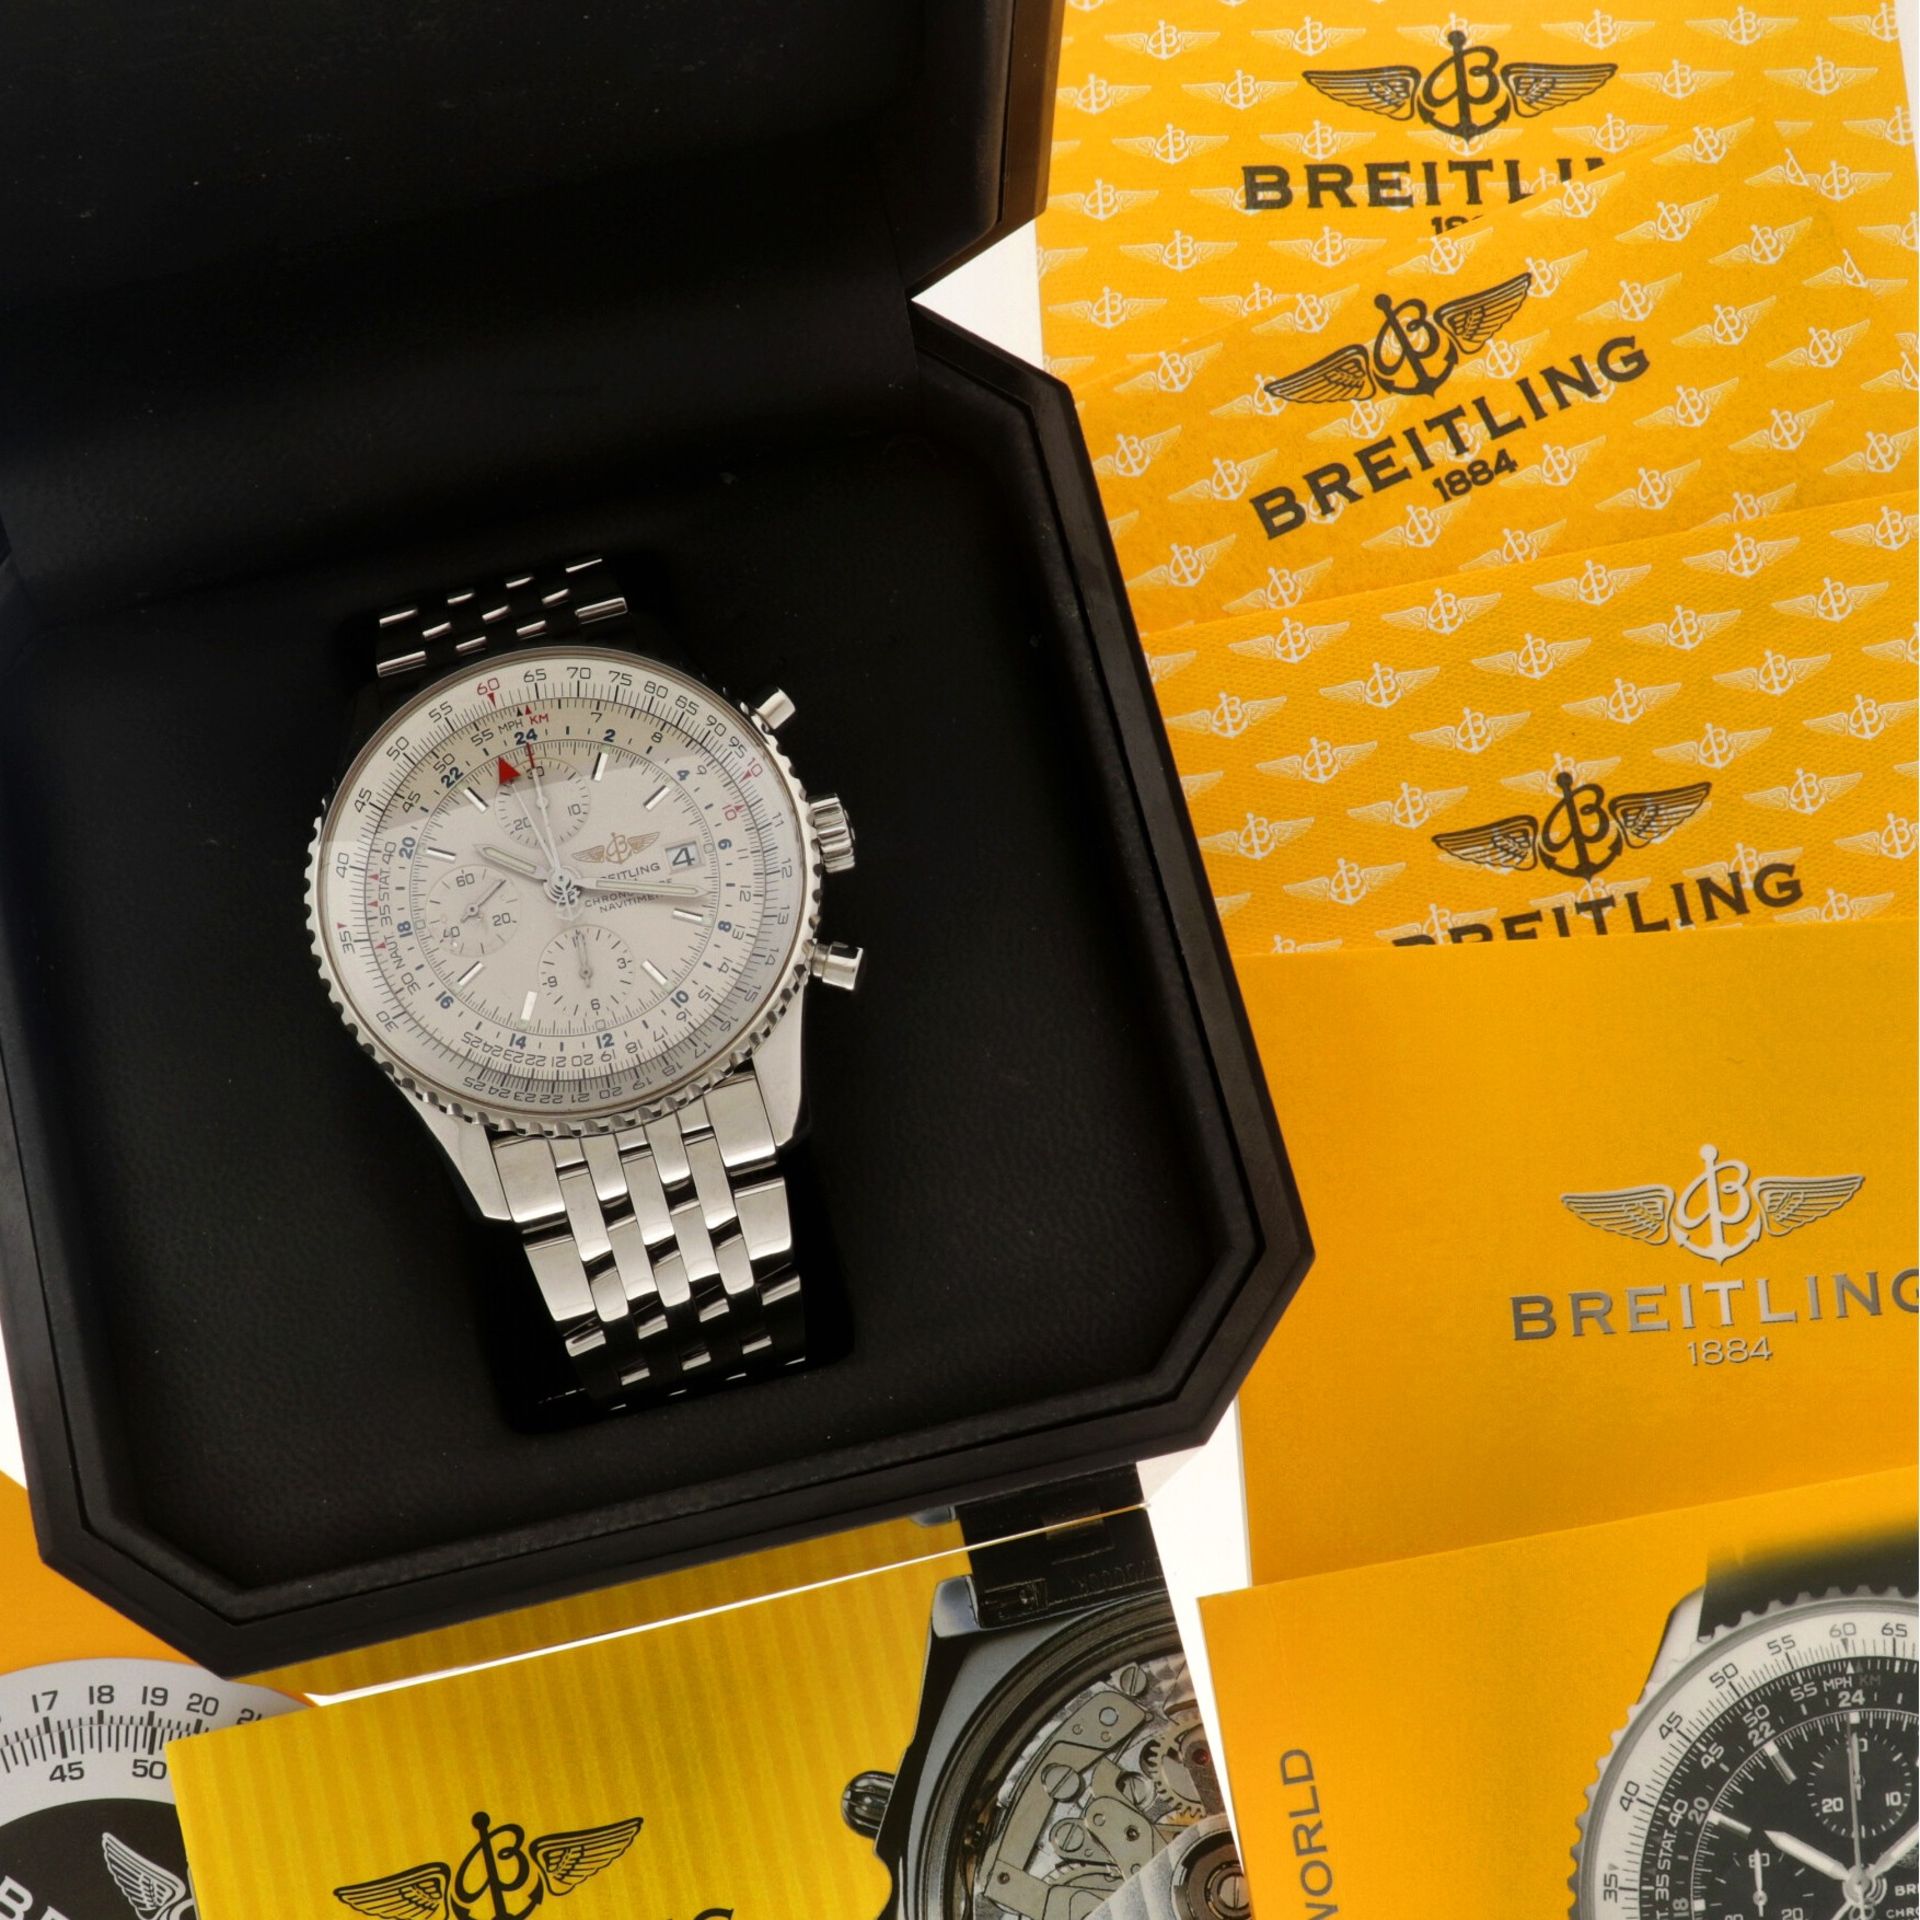 Breitling Navitimer World A24322 - Men's watch - 2006. - Image 6 of 6